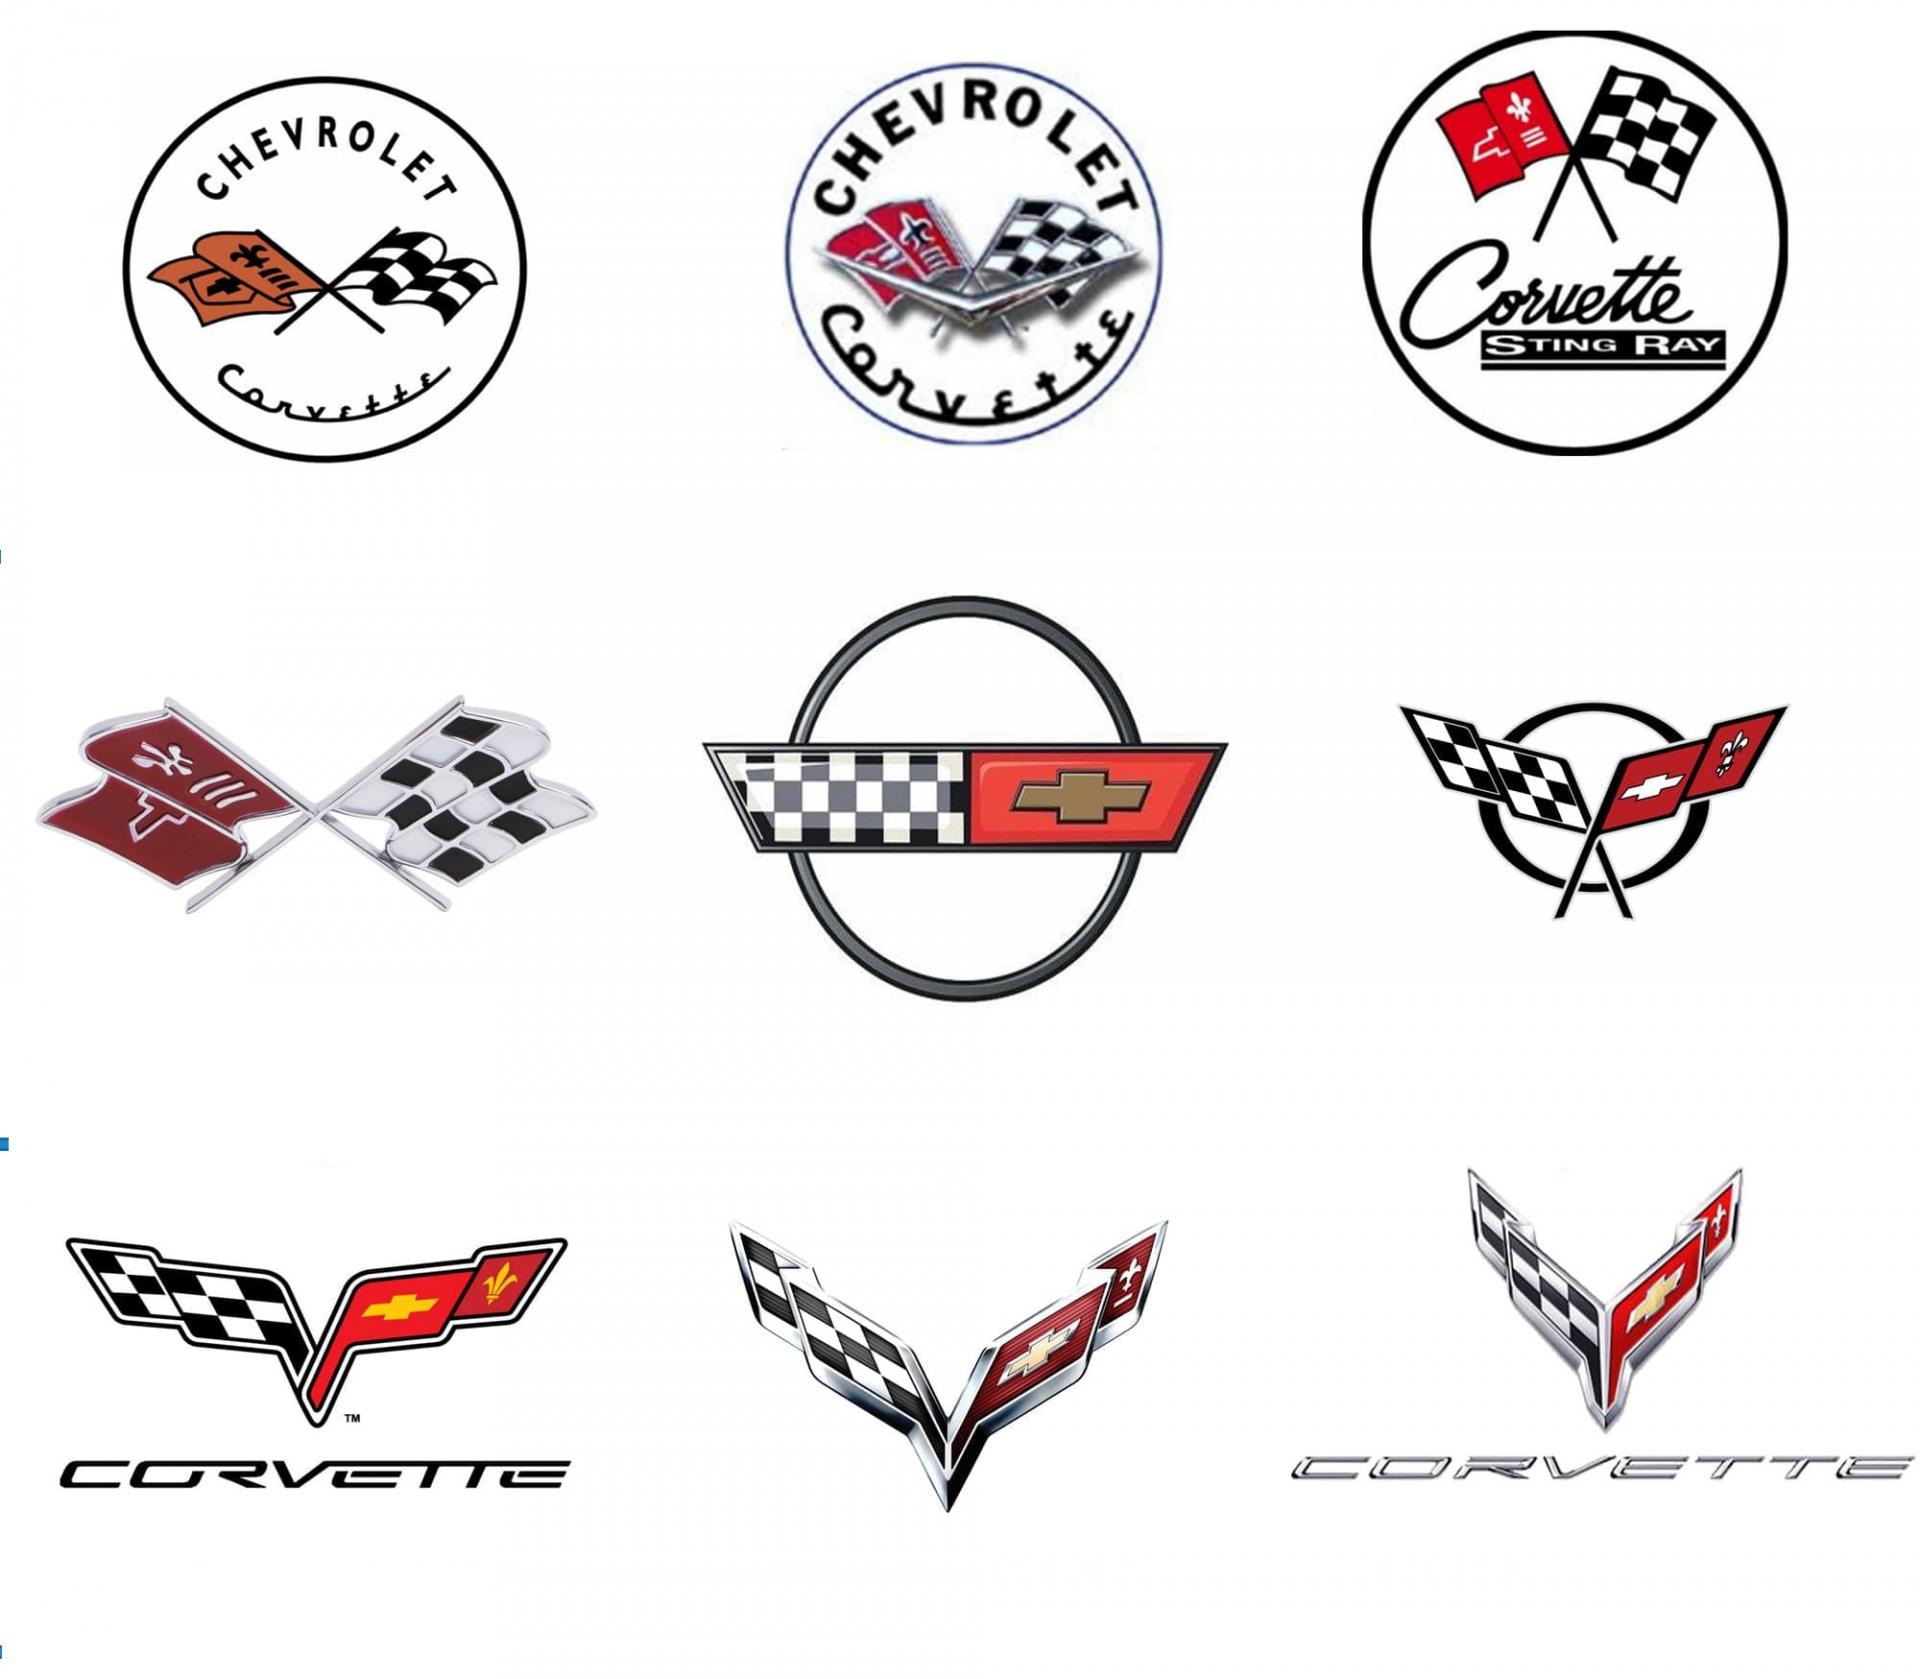 Corvette logo histoire 1